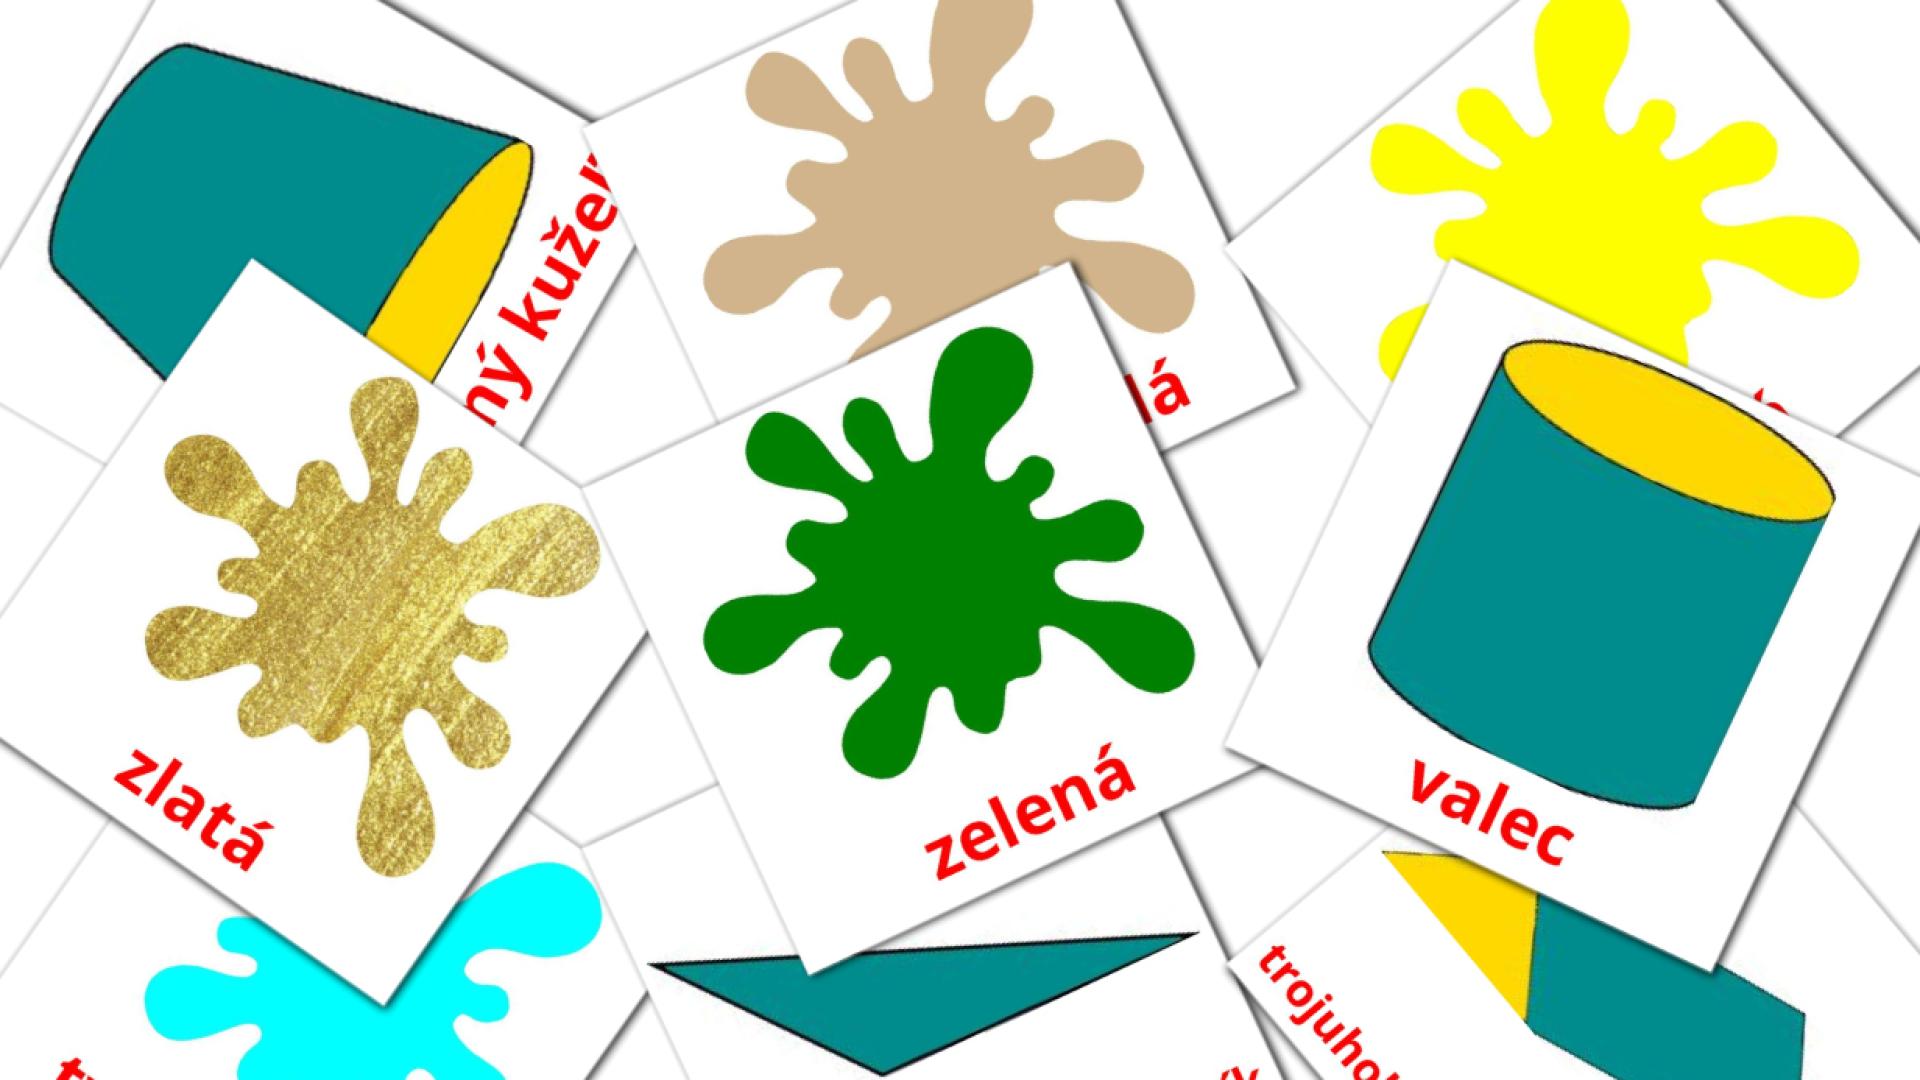 Farby a tvary Flashcards di vocabolario slovacco